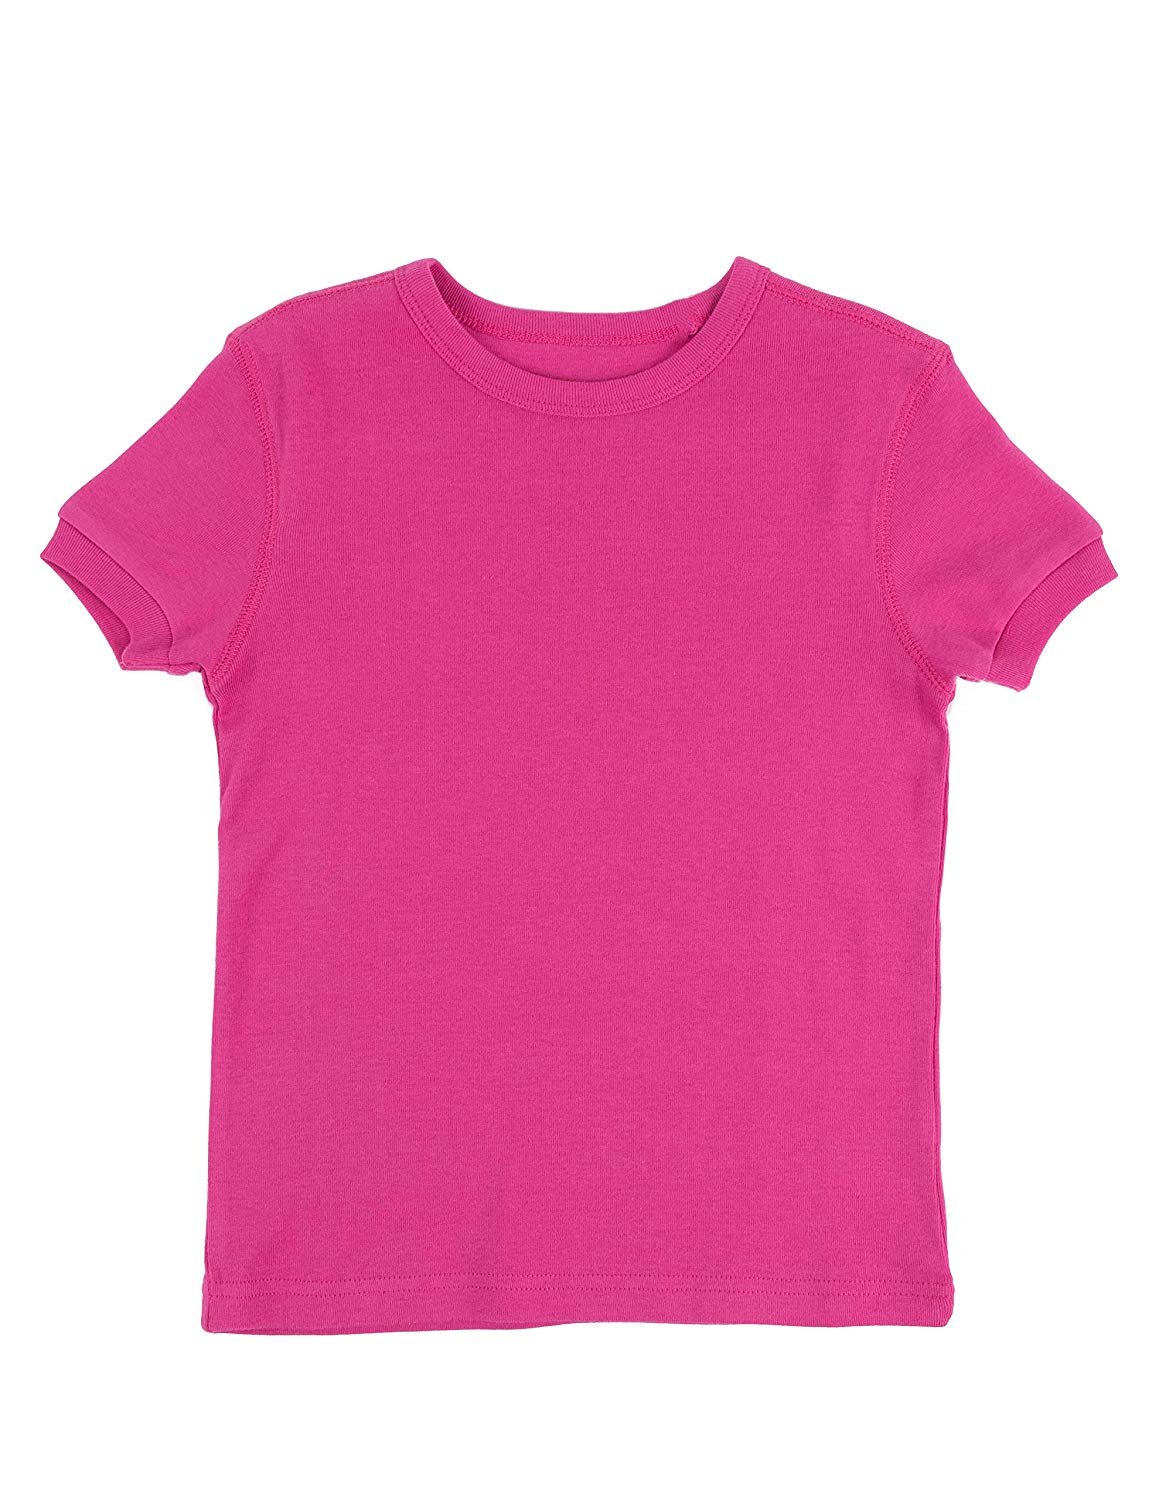 Leveret Short Sleeve Top Boys Girls Kids T-Shirt 100% Cotton (Dark Grey,Size 6 Years) - image 2 of 10